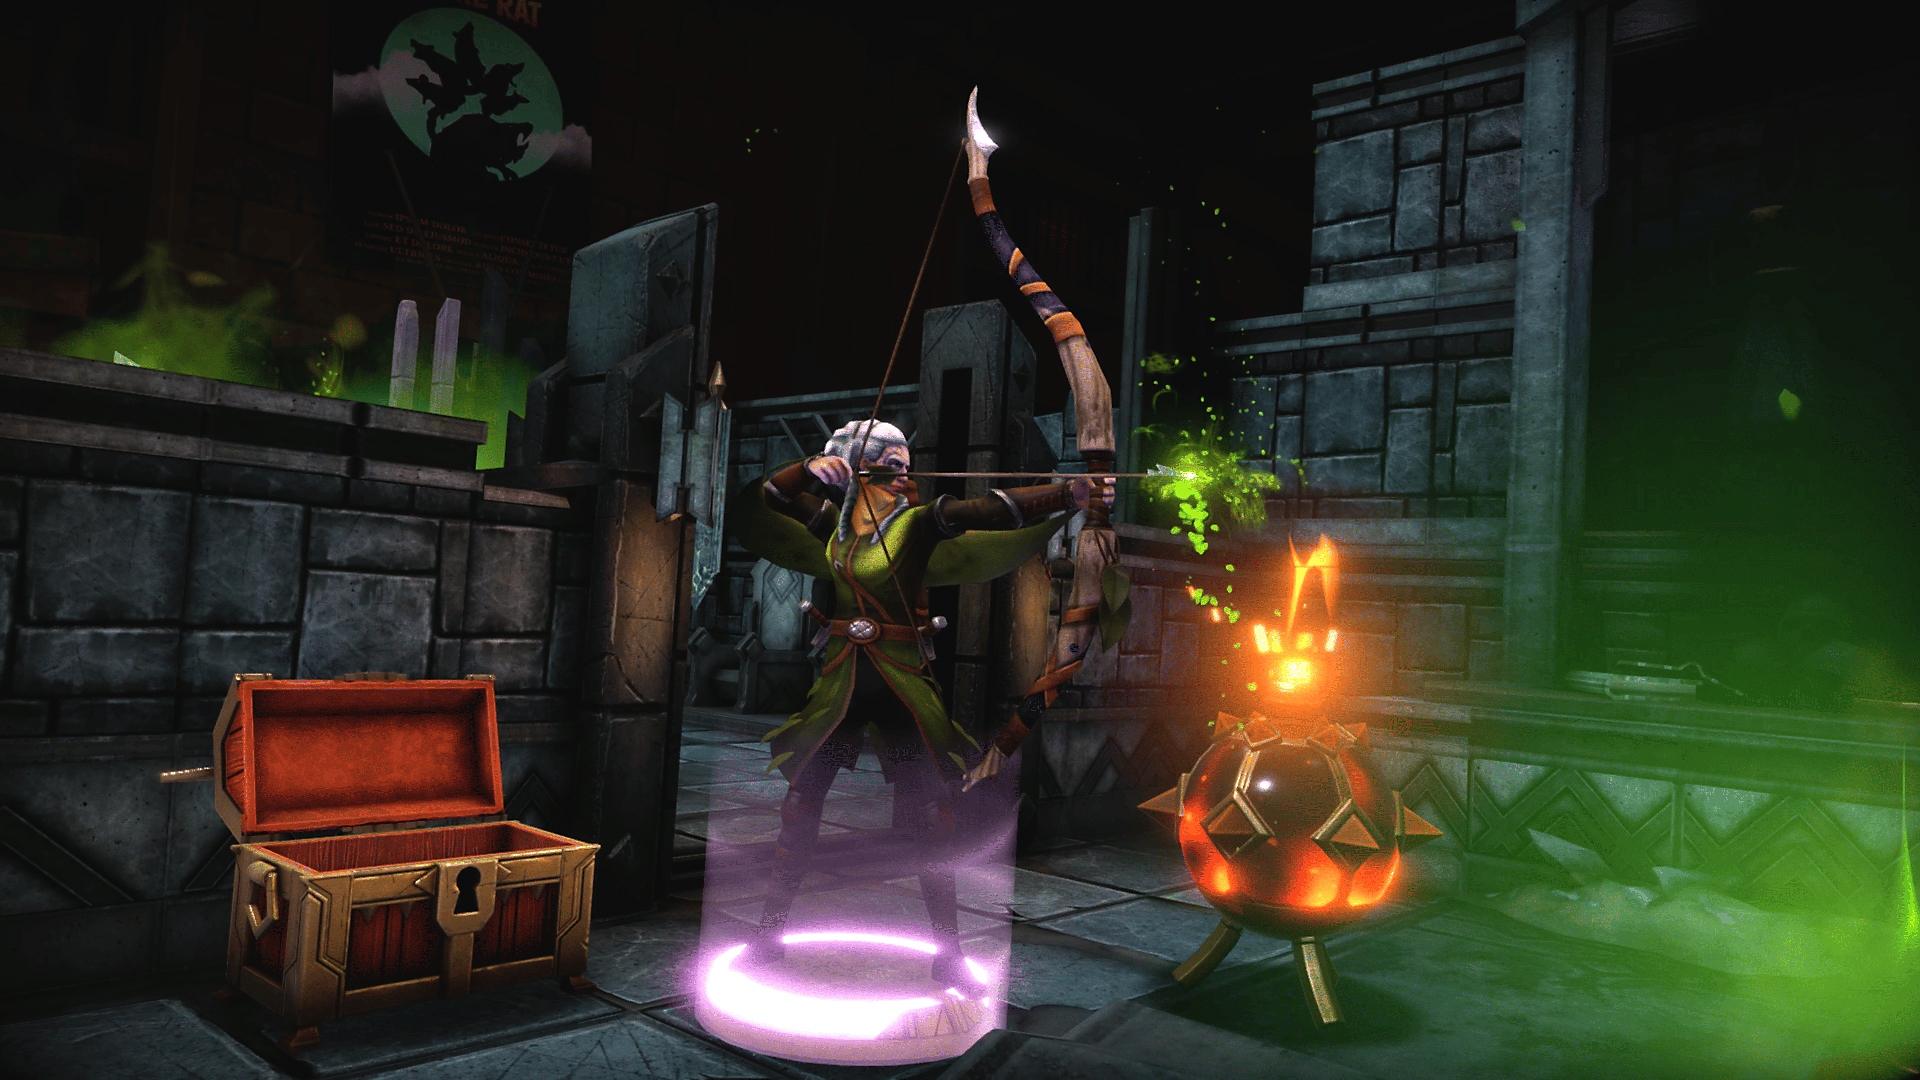 Captura de pantalla de Demeo que muestra a un personaje tirando de un arco para disparar una flecha